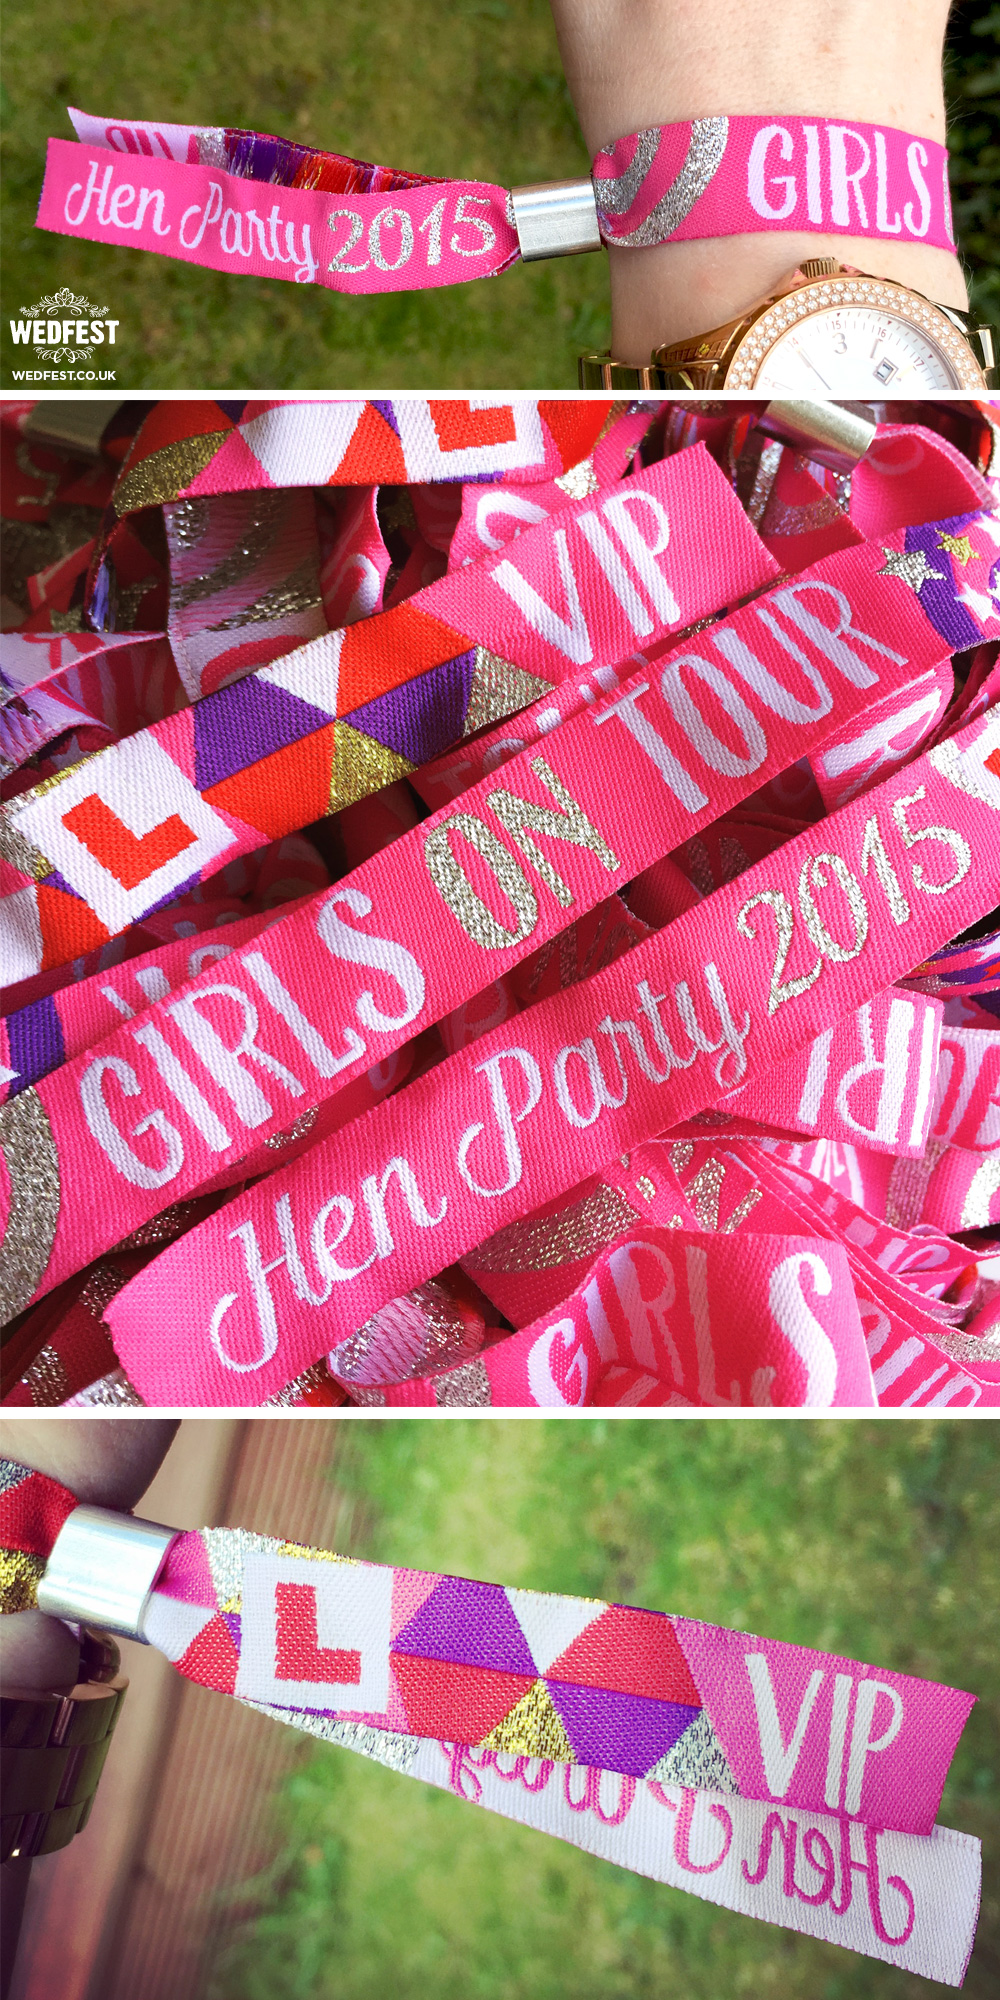 Hen Party Weekend - Girls on Tour Wristbands